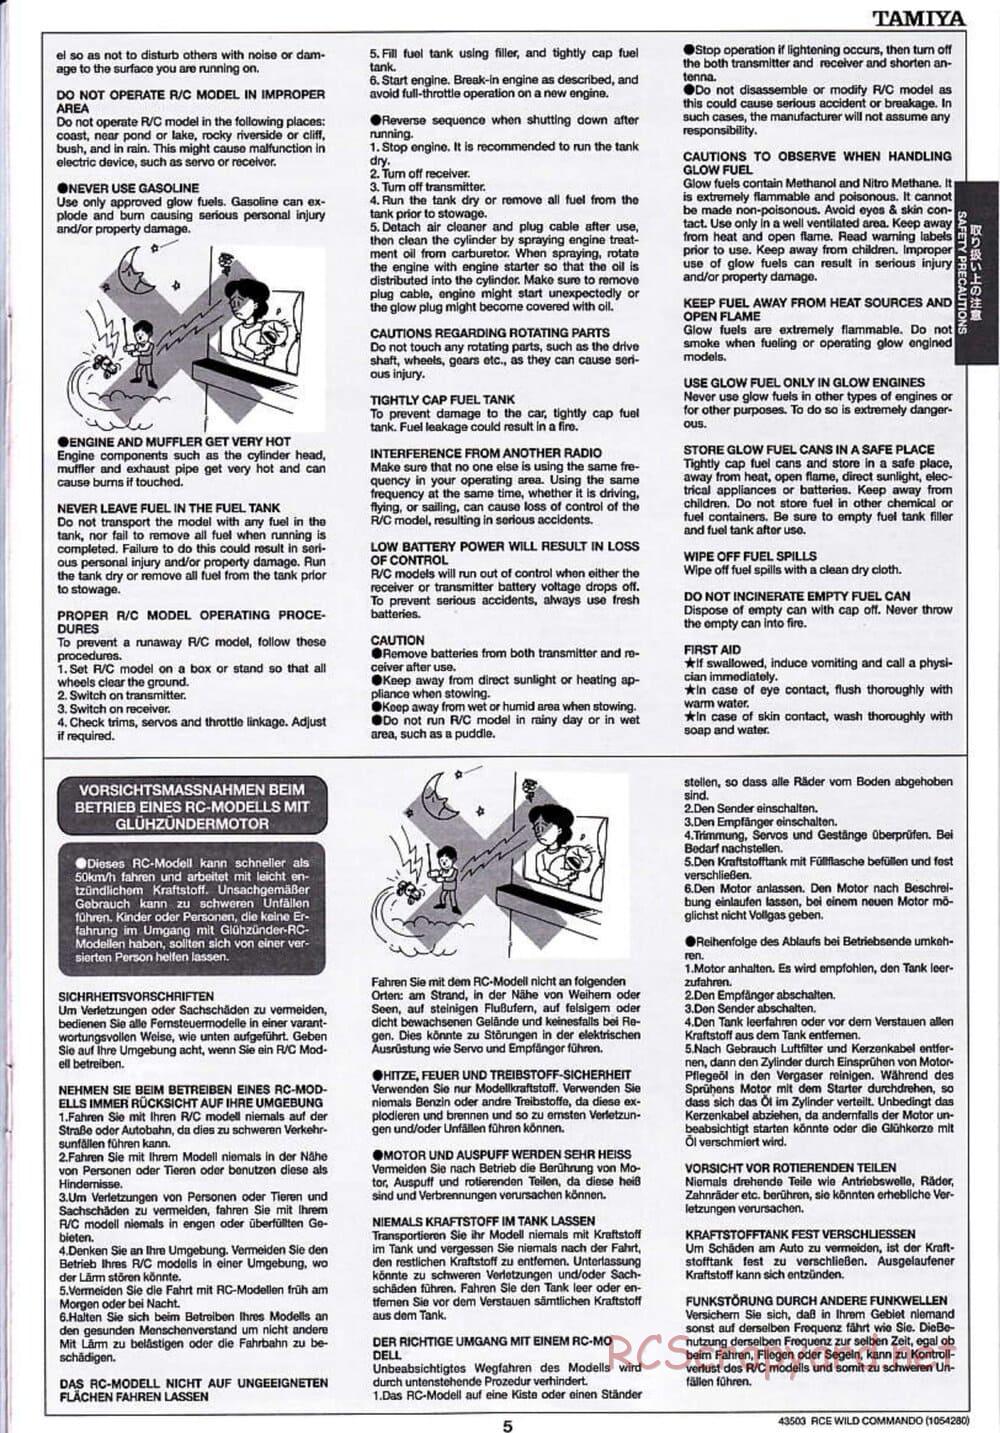 Tamiya - Wild Commando - TGM-02 Chassis - Manual - Page 5